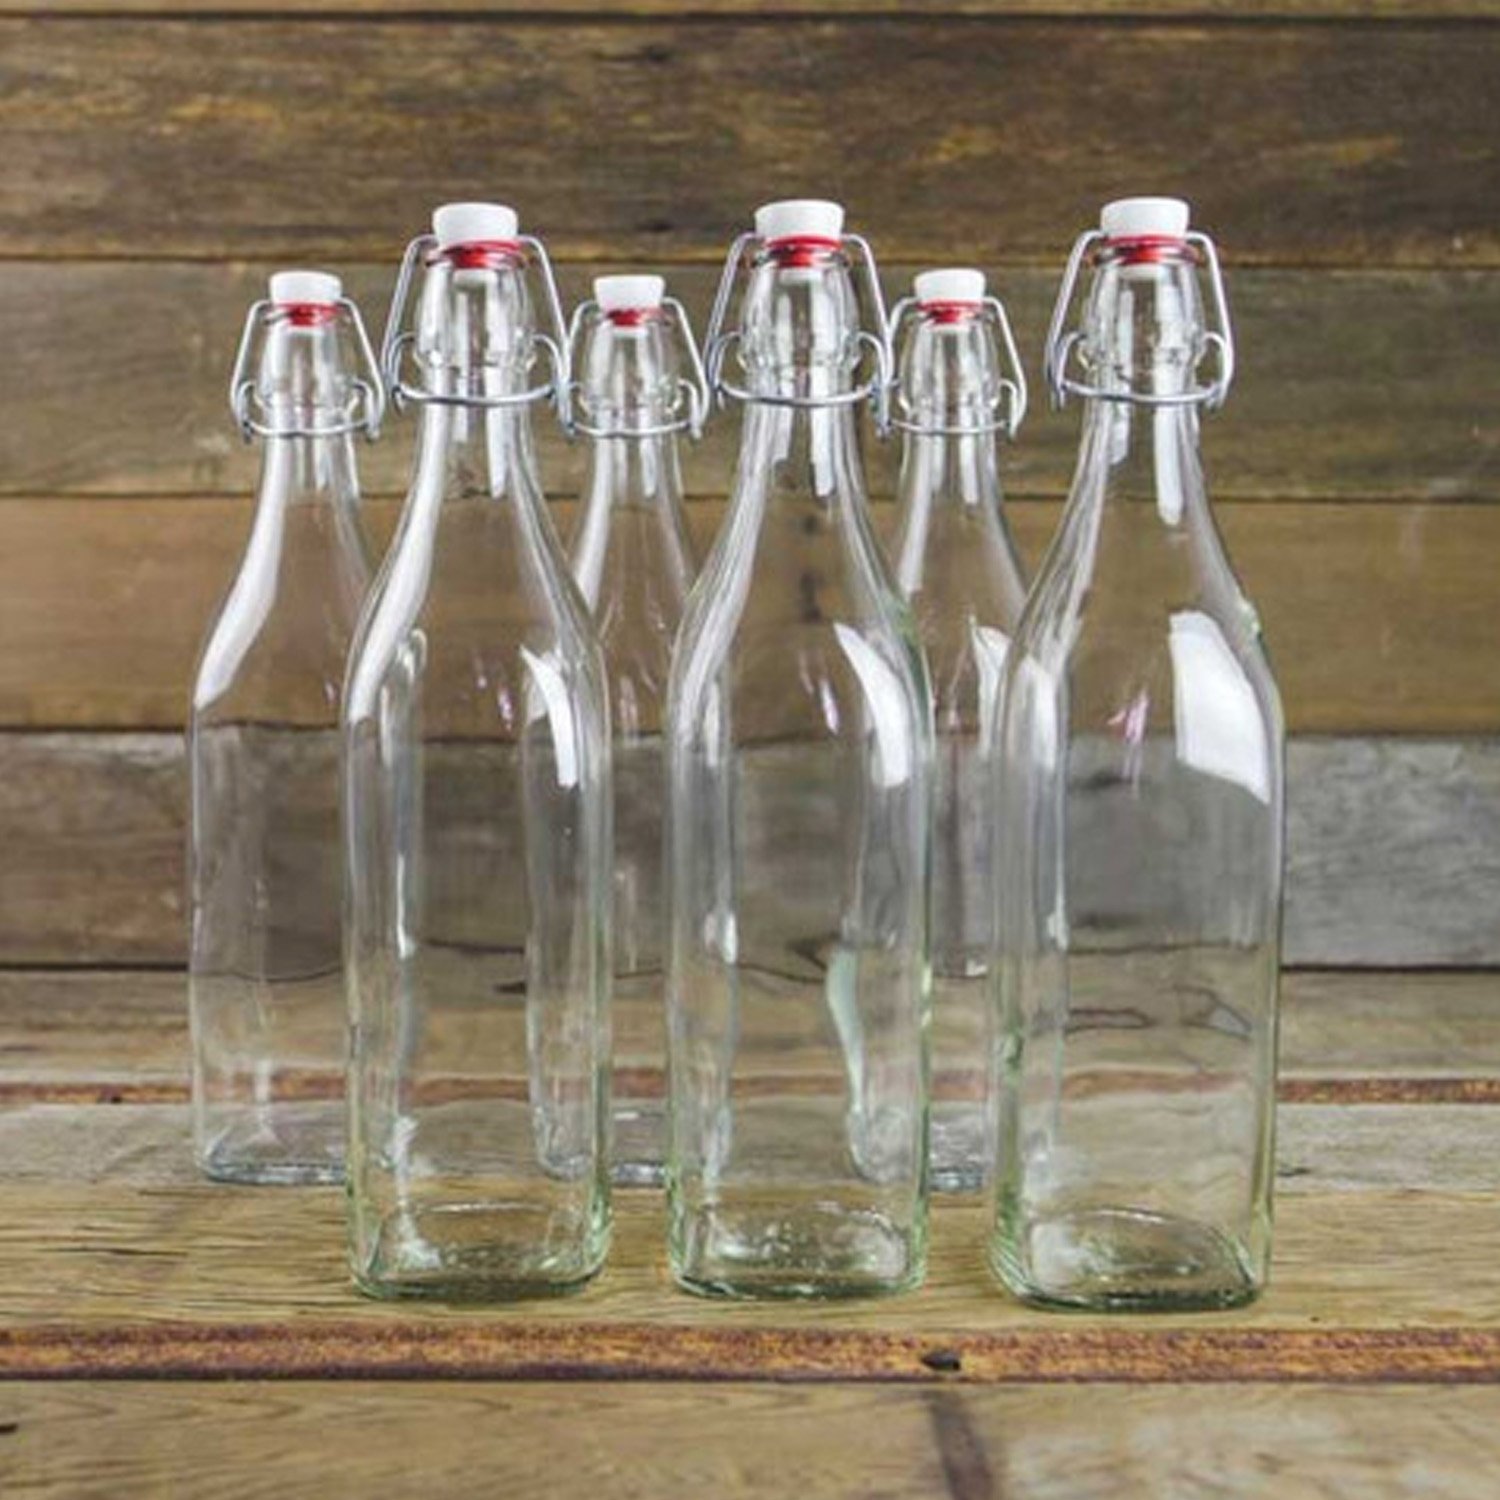 Amazon.com: Bormioli Rocco Giara Clear Glass Bottle With Stopper ...